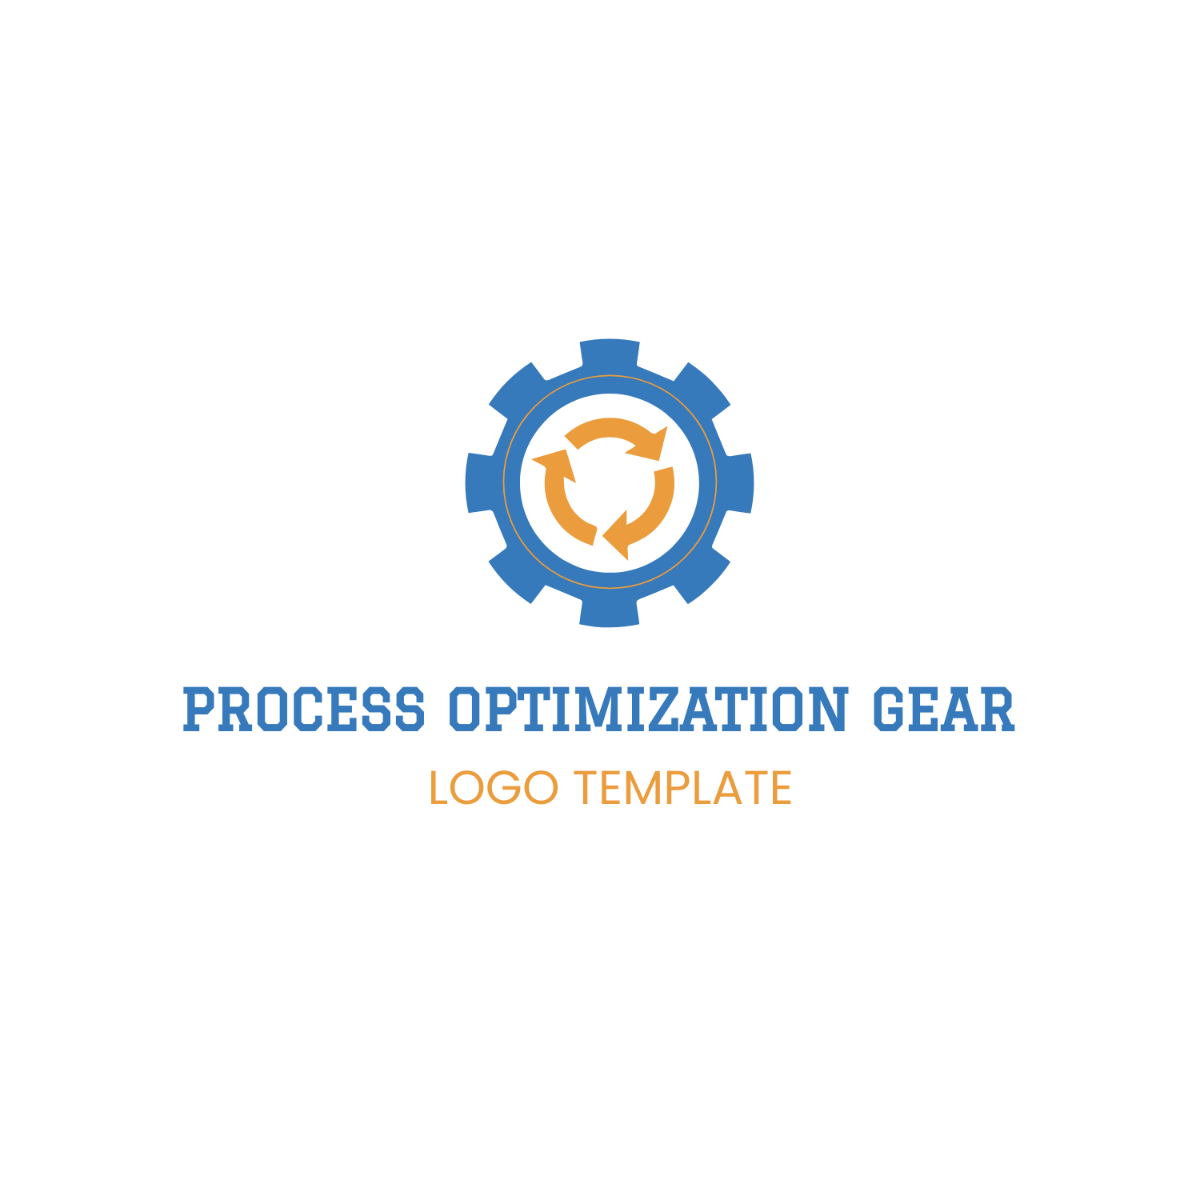 Process Optimization Gear Logo Template